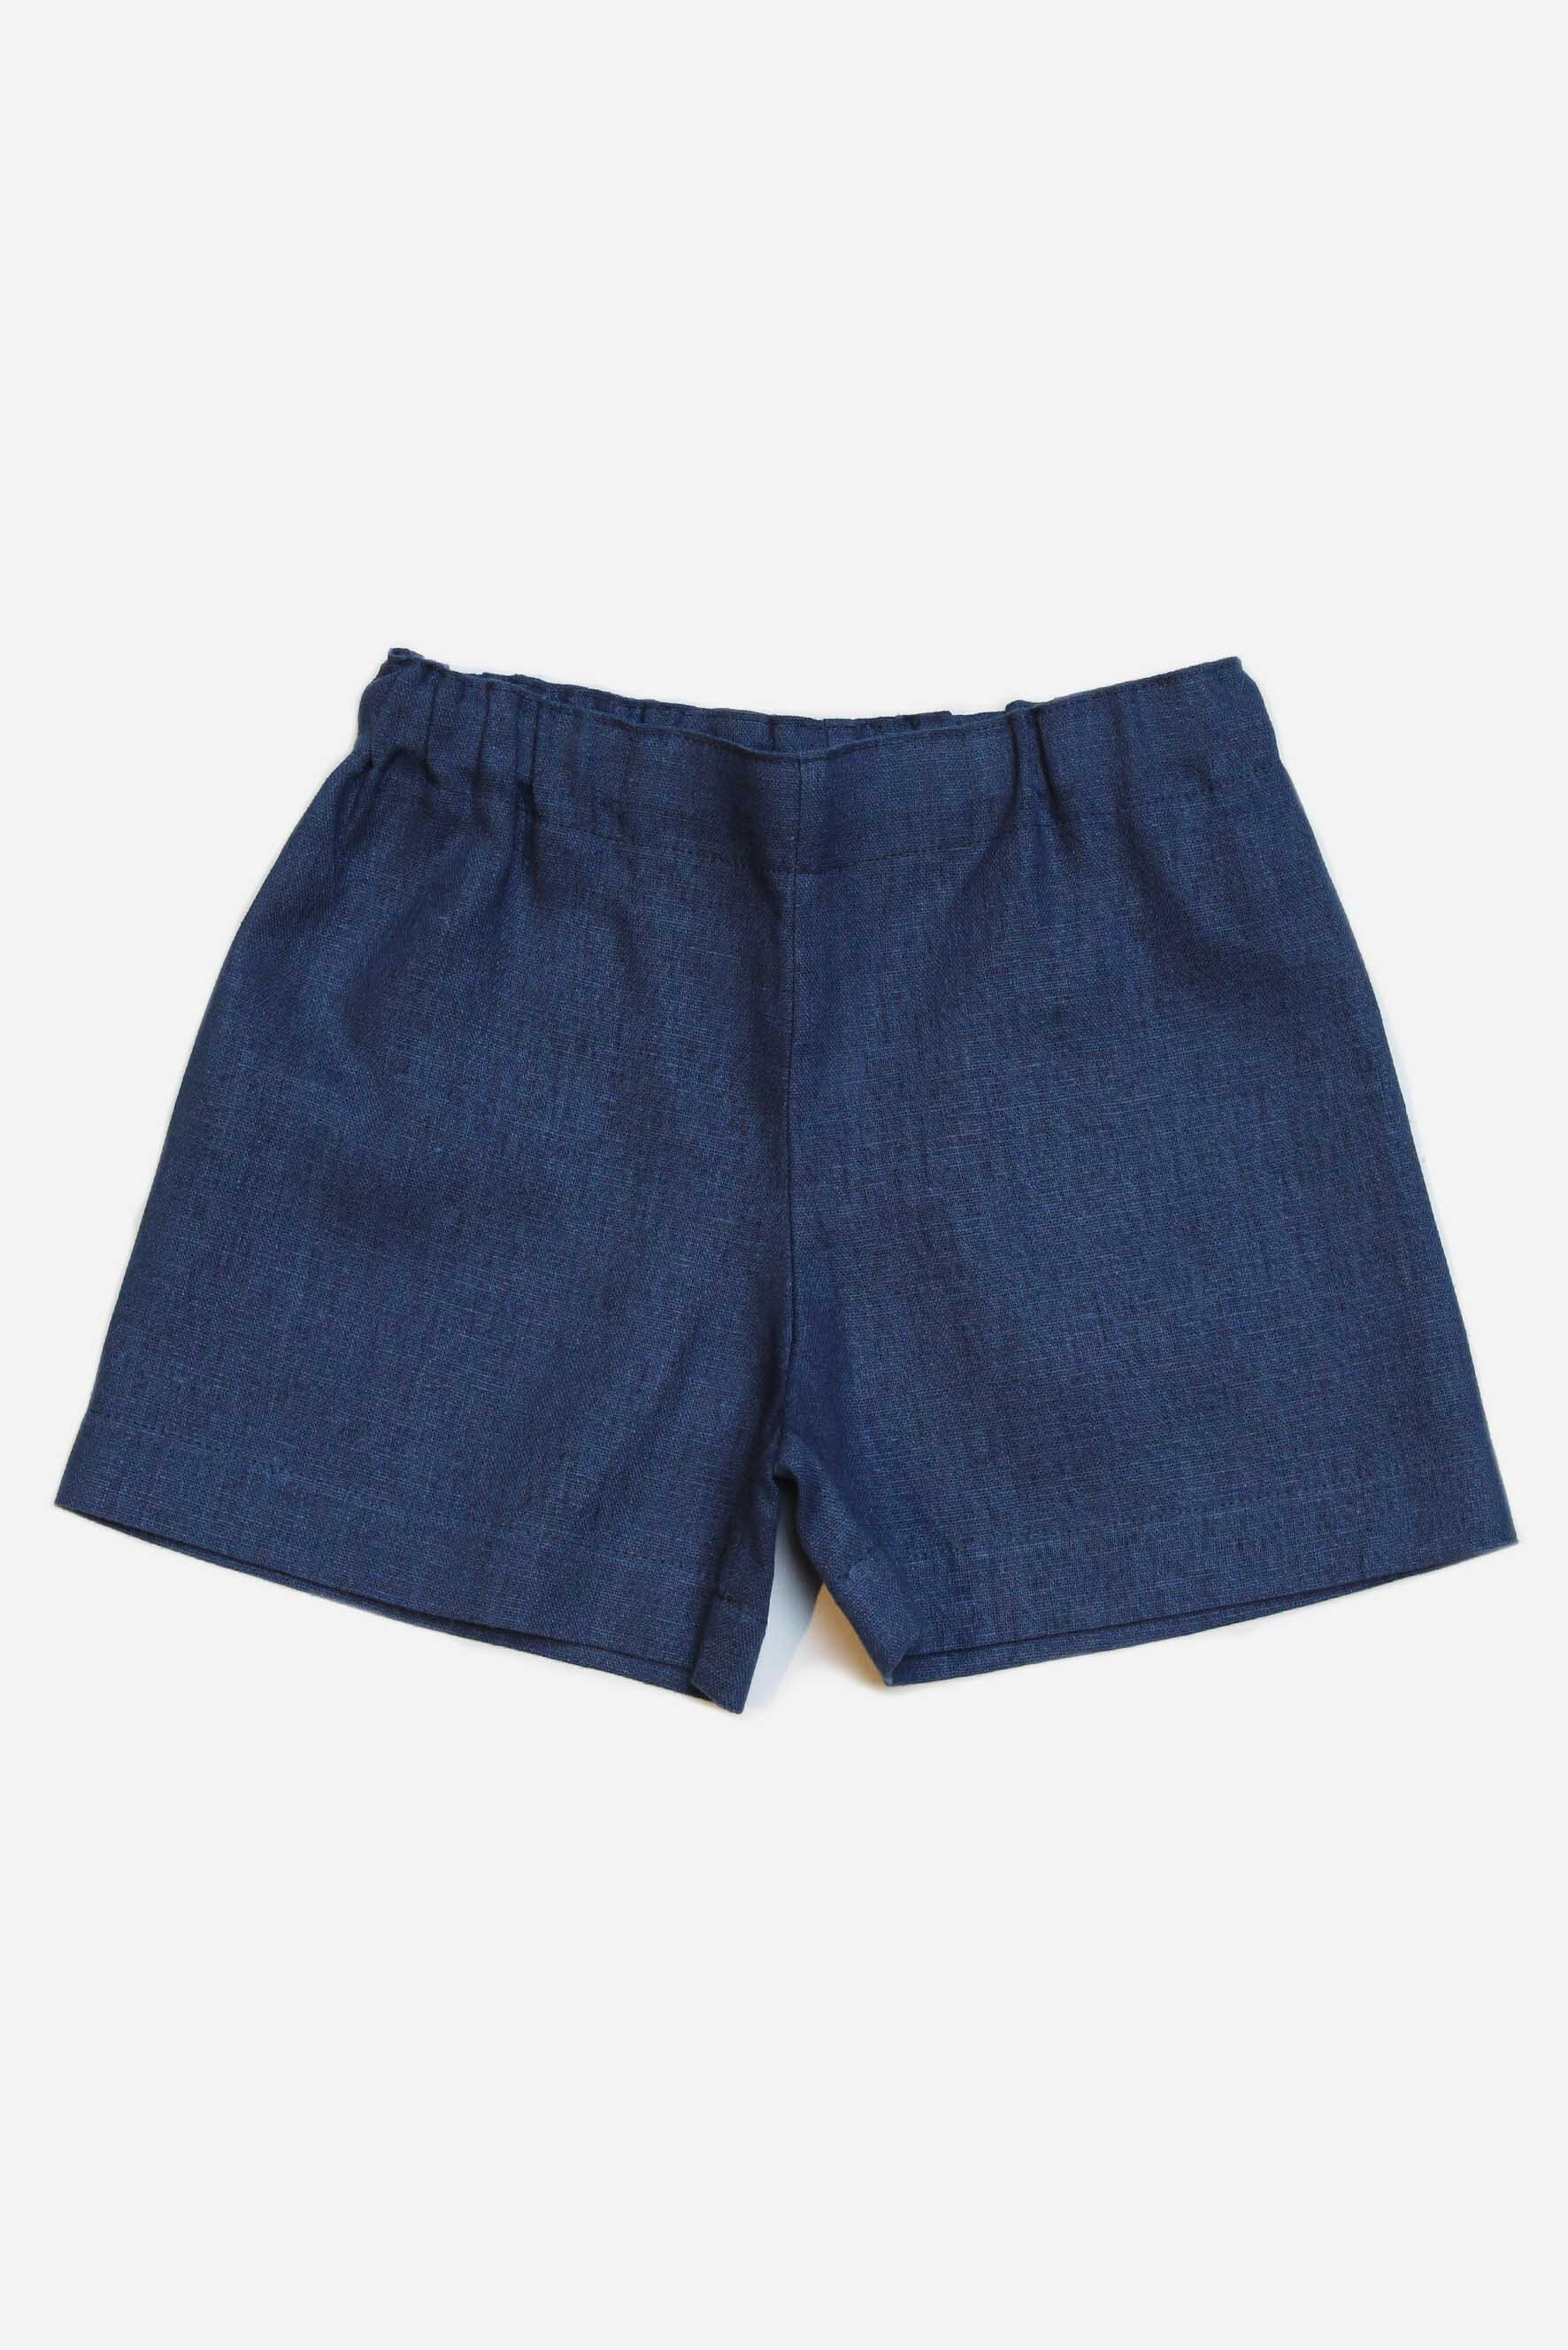 Pantaloncini bambina lino blu